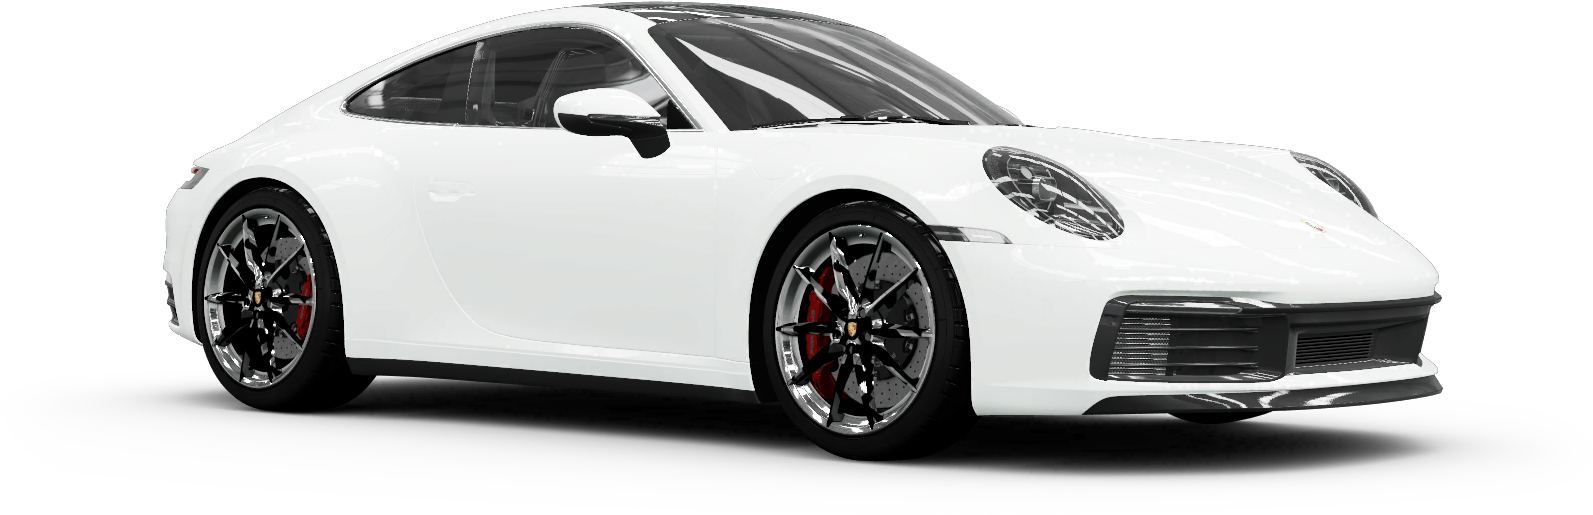 White Porsche911 Carrera Side View PNG